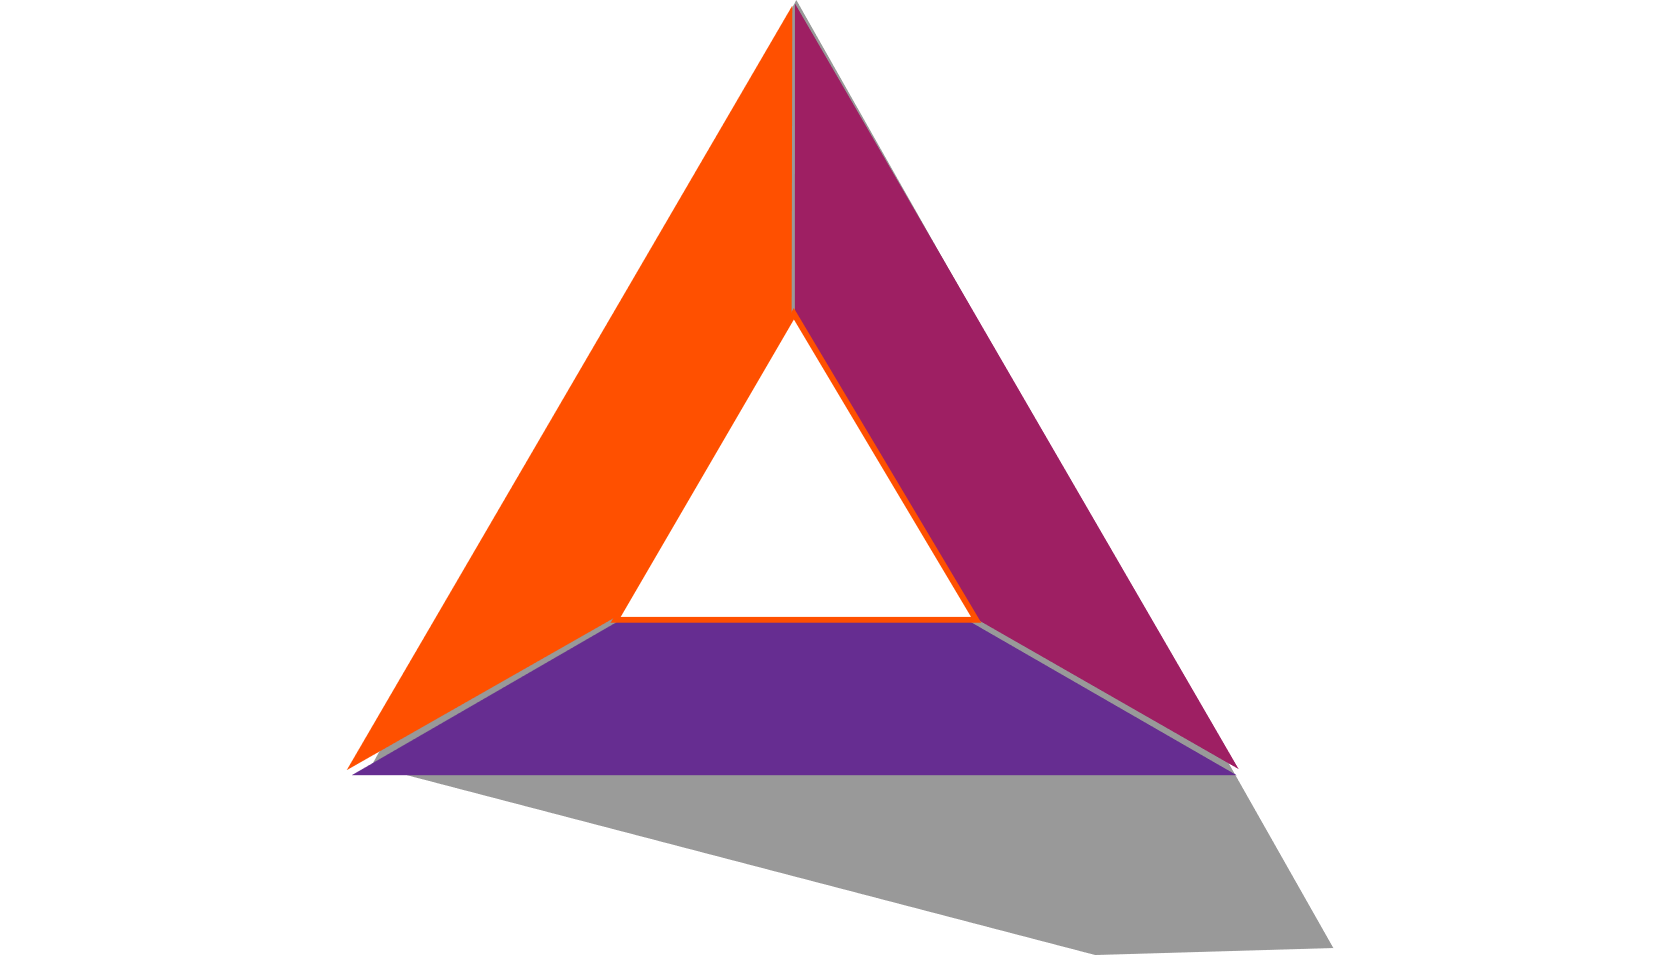 Basic attention. Bat Basic attention token. Basic attention token криптовалюта. Логотип треугольник. Логотип из треугольников.